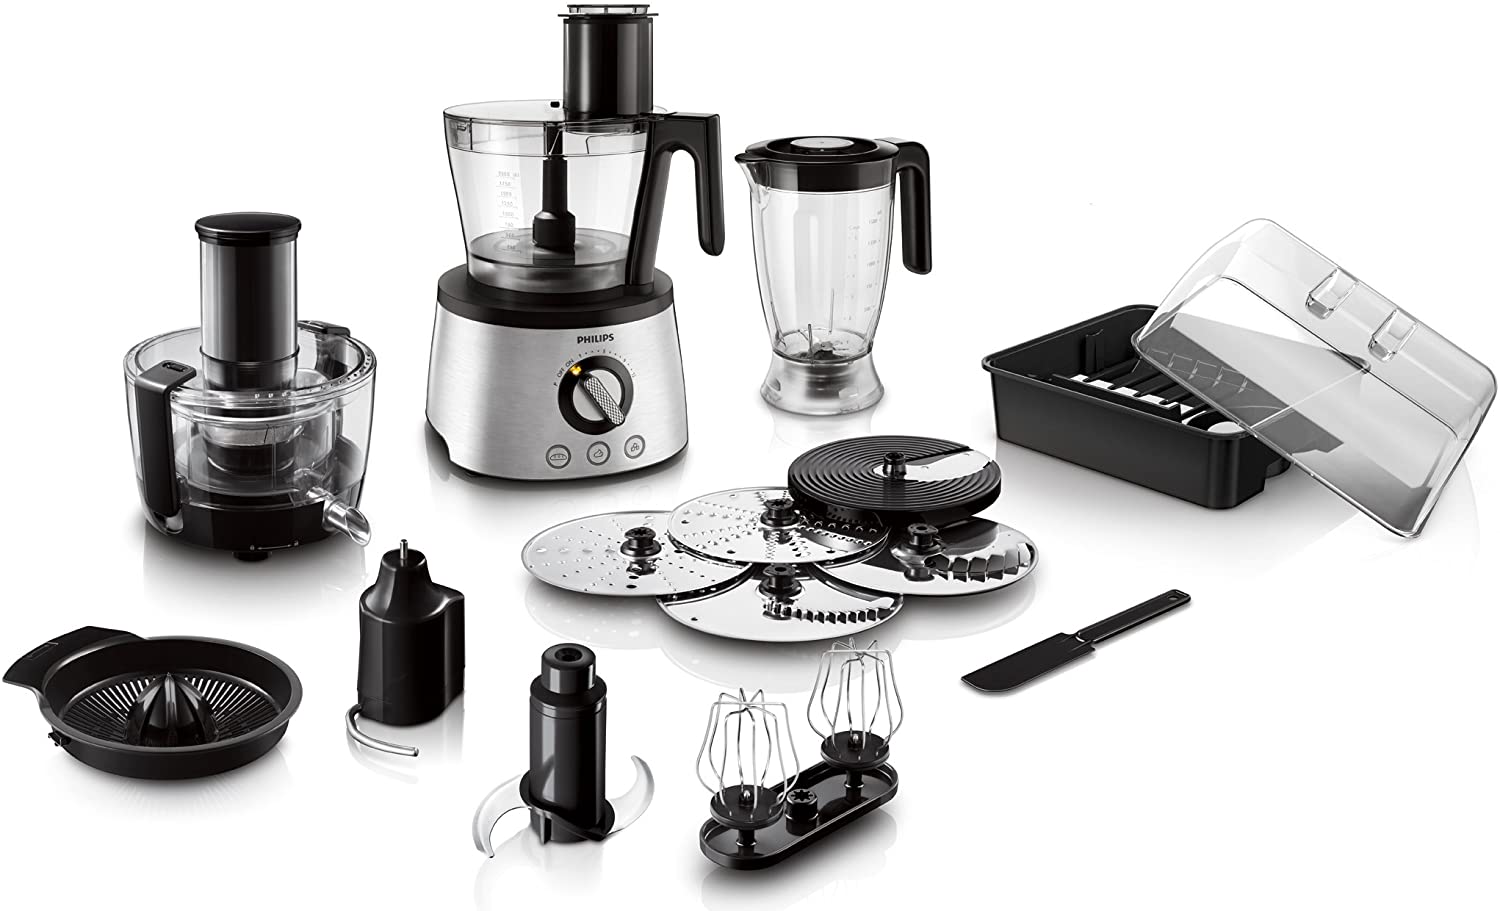 Philips HR7778 / 00 food processor (1,300 watts, incl. Dough hook, juicer, blender and citrus press) black / silver